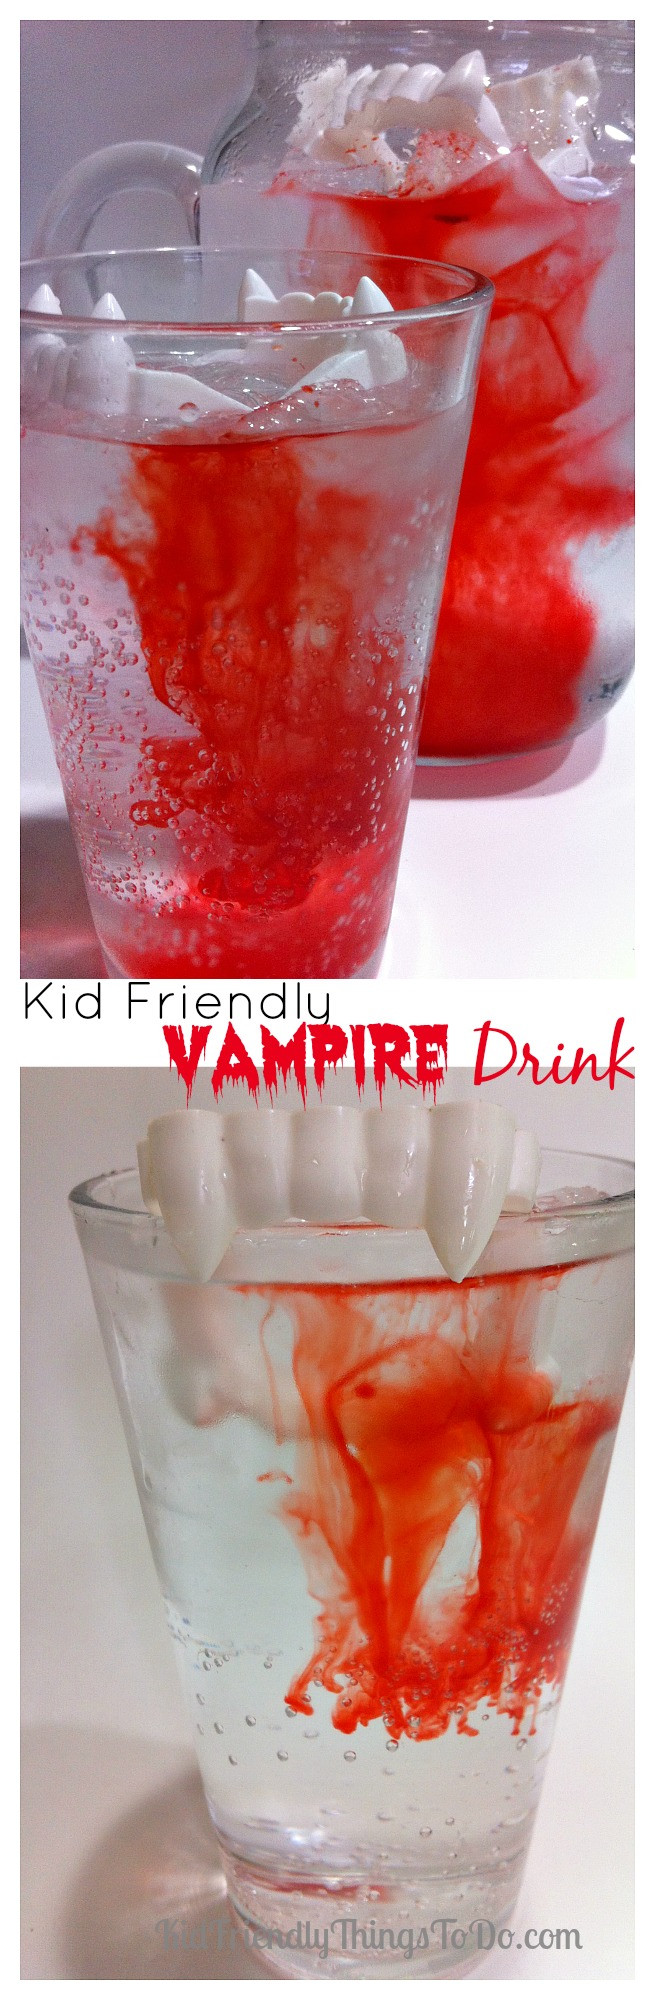 Halloween Foods And Drinks
 Kid Friendly Halloween Vampire Drink